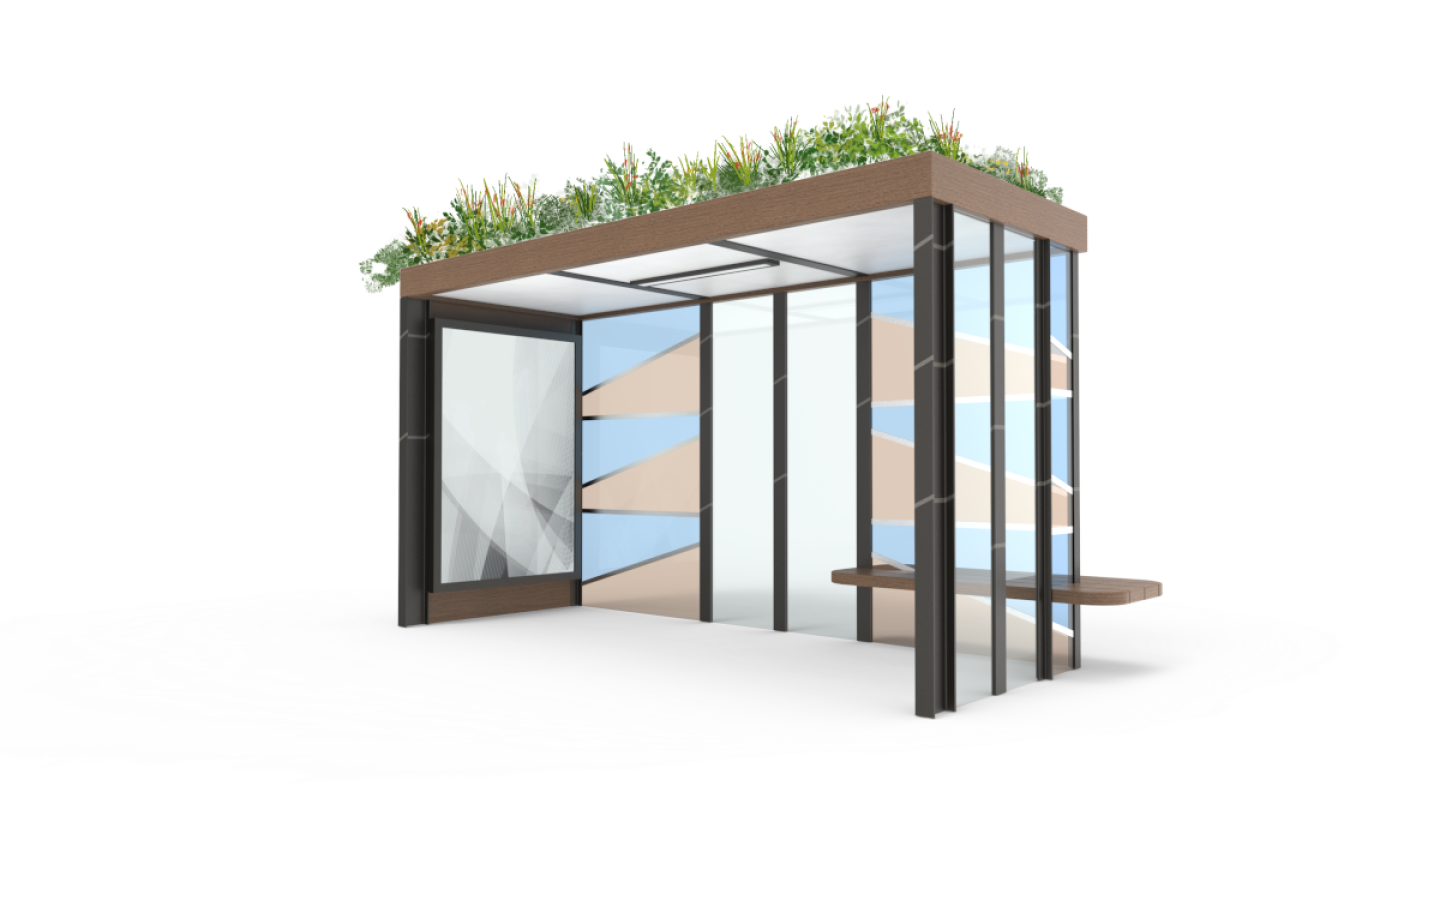 Tiny House bus shelter